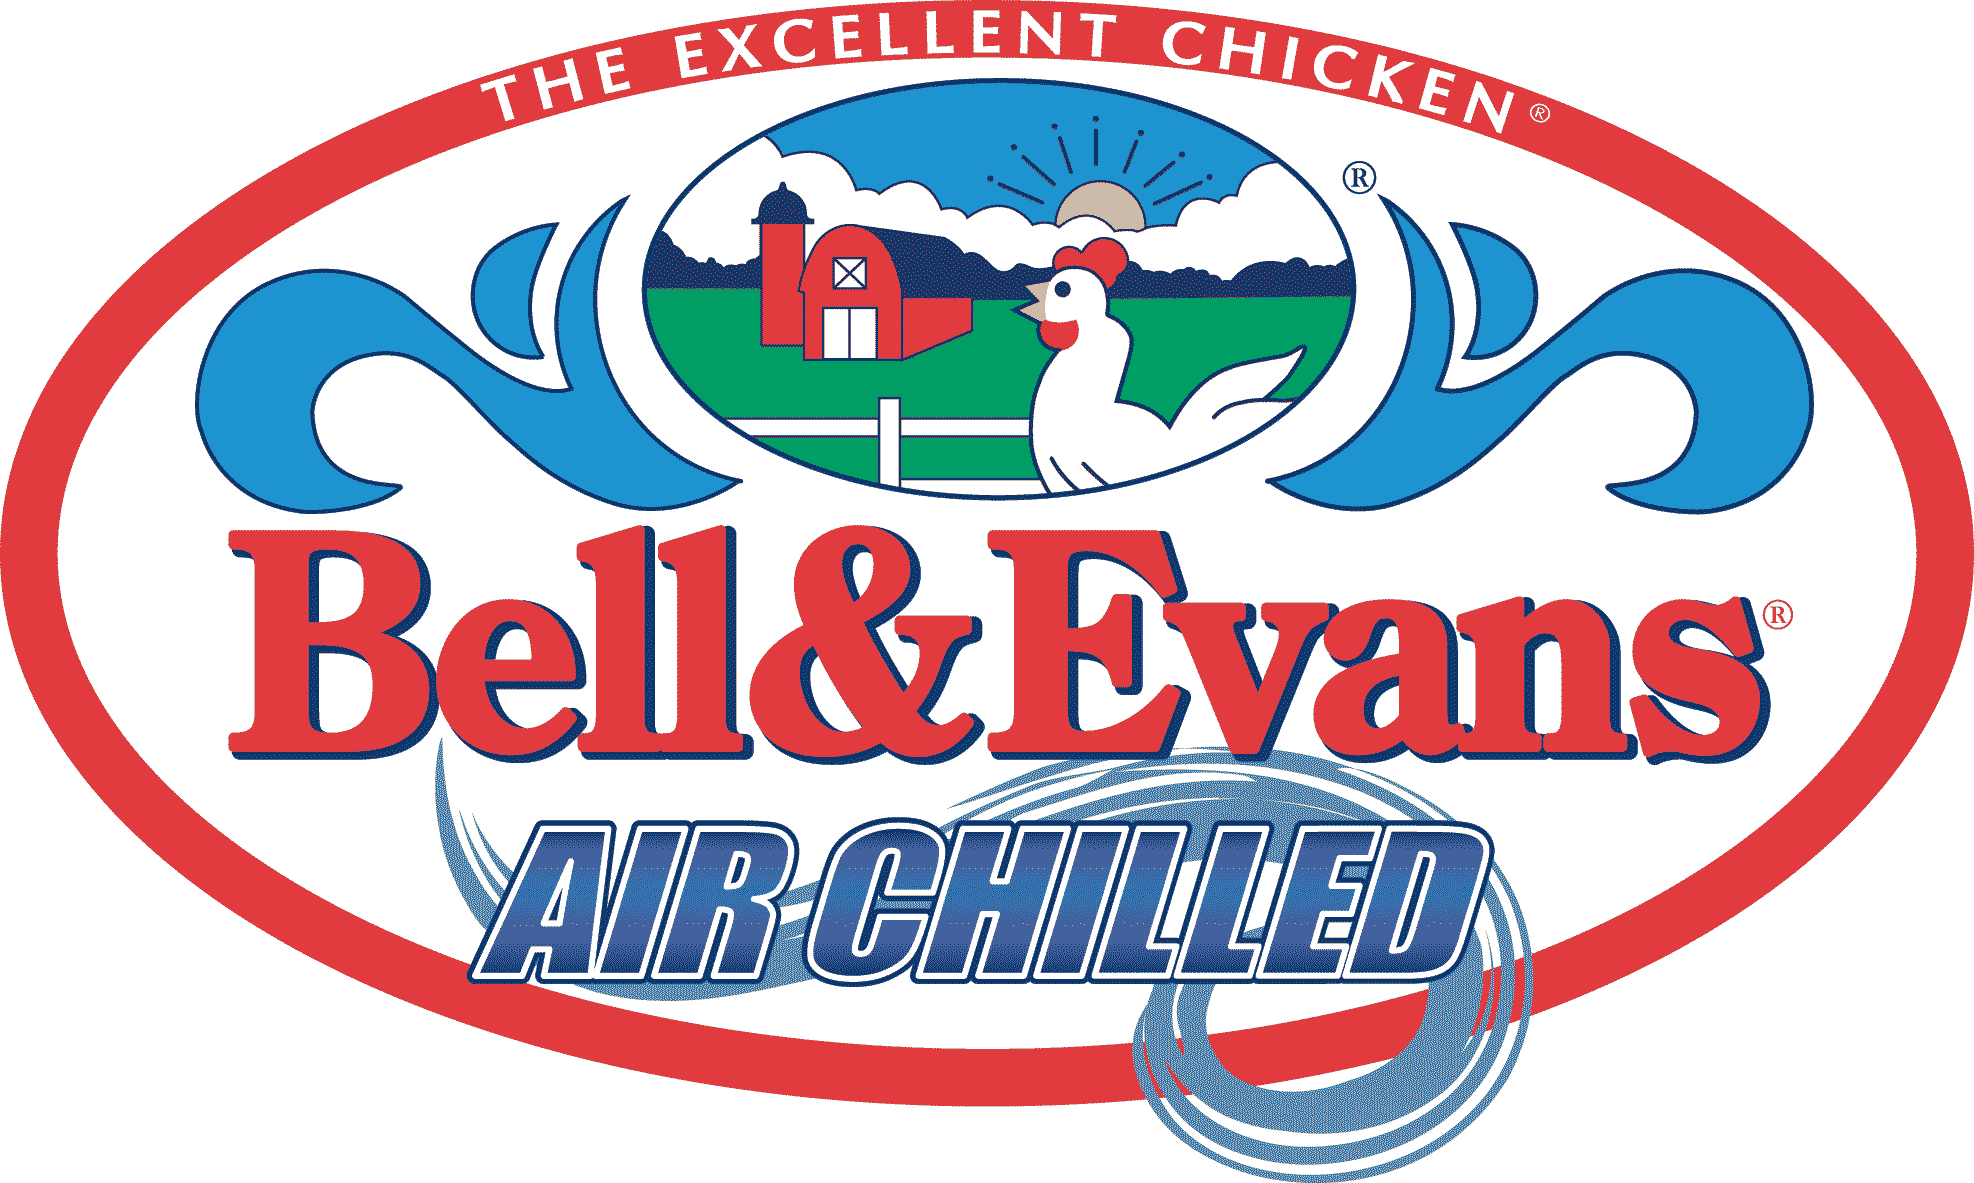 Whole Organic Chicken - Bell & Evans